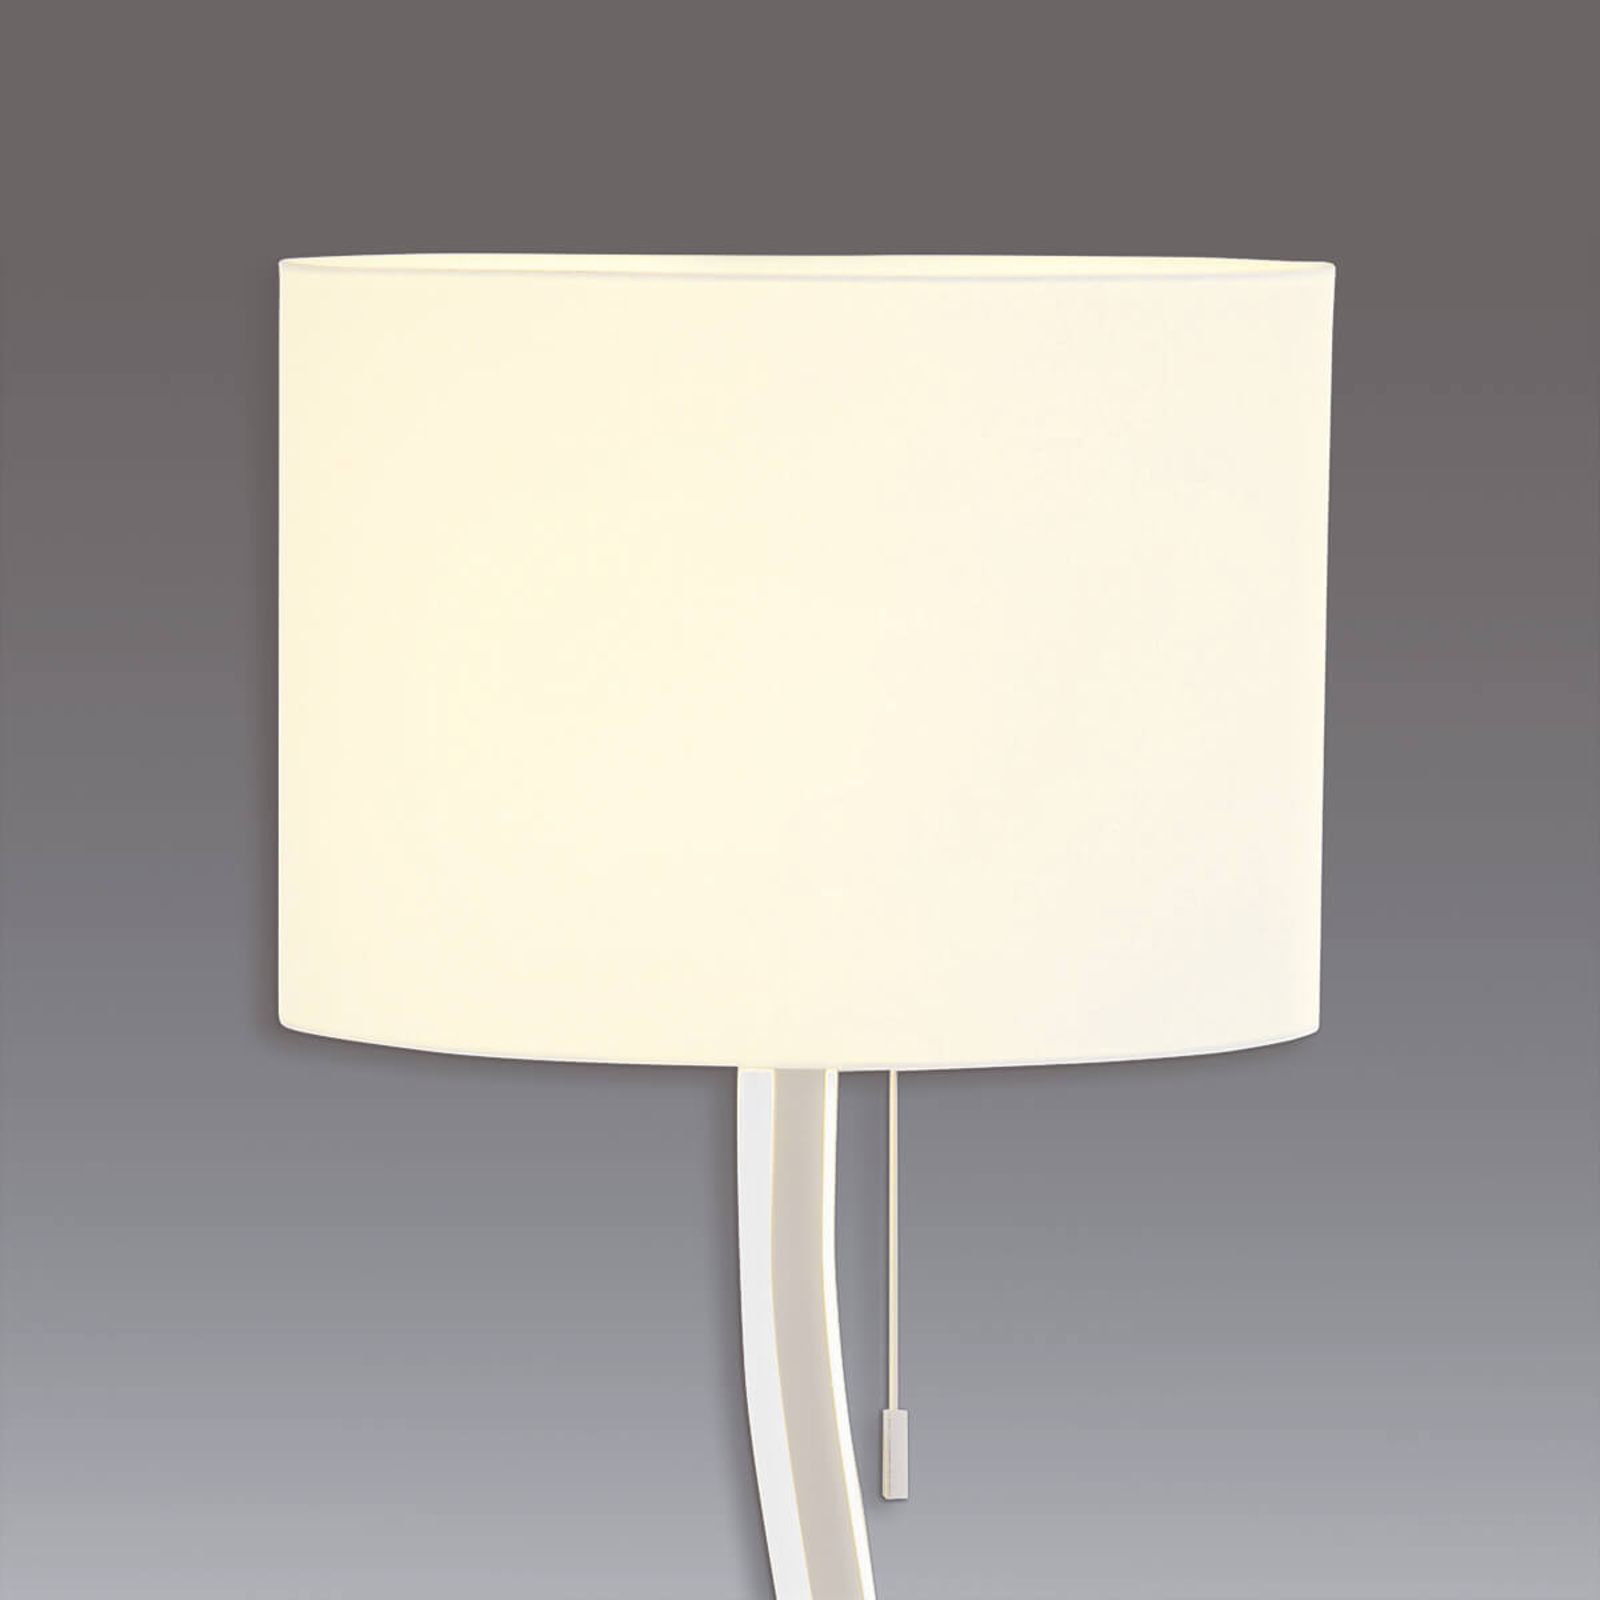 Zakrivená stojaca lampa Maren s diódami LED